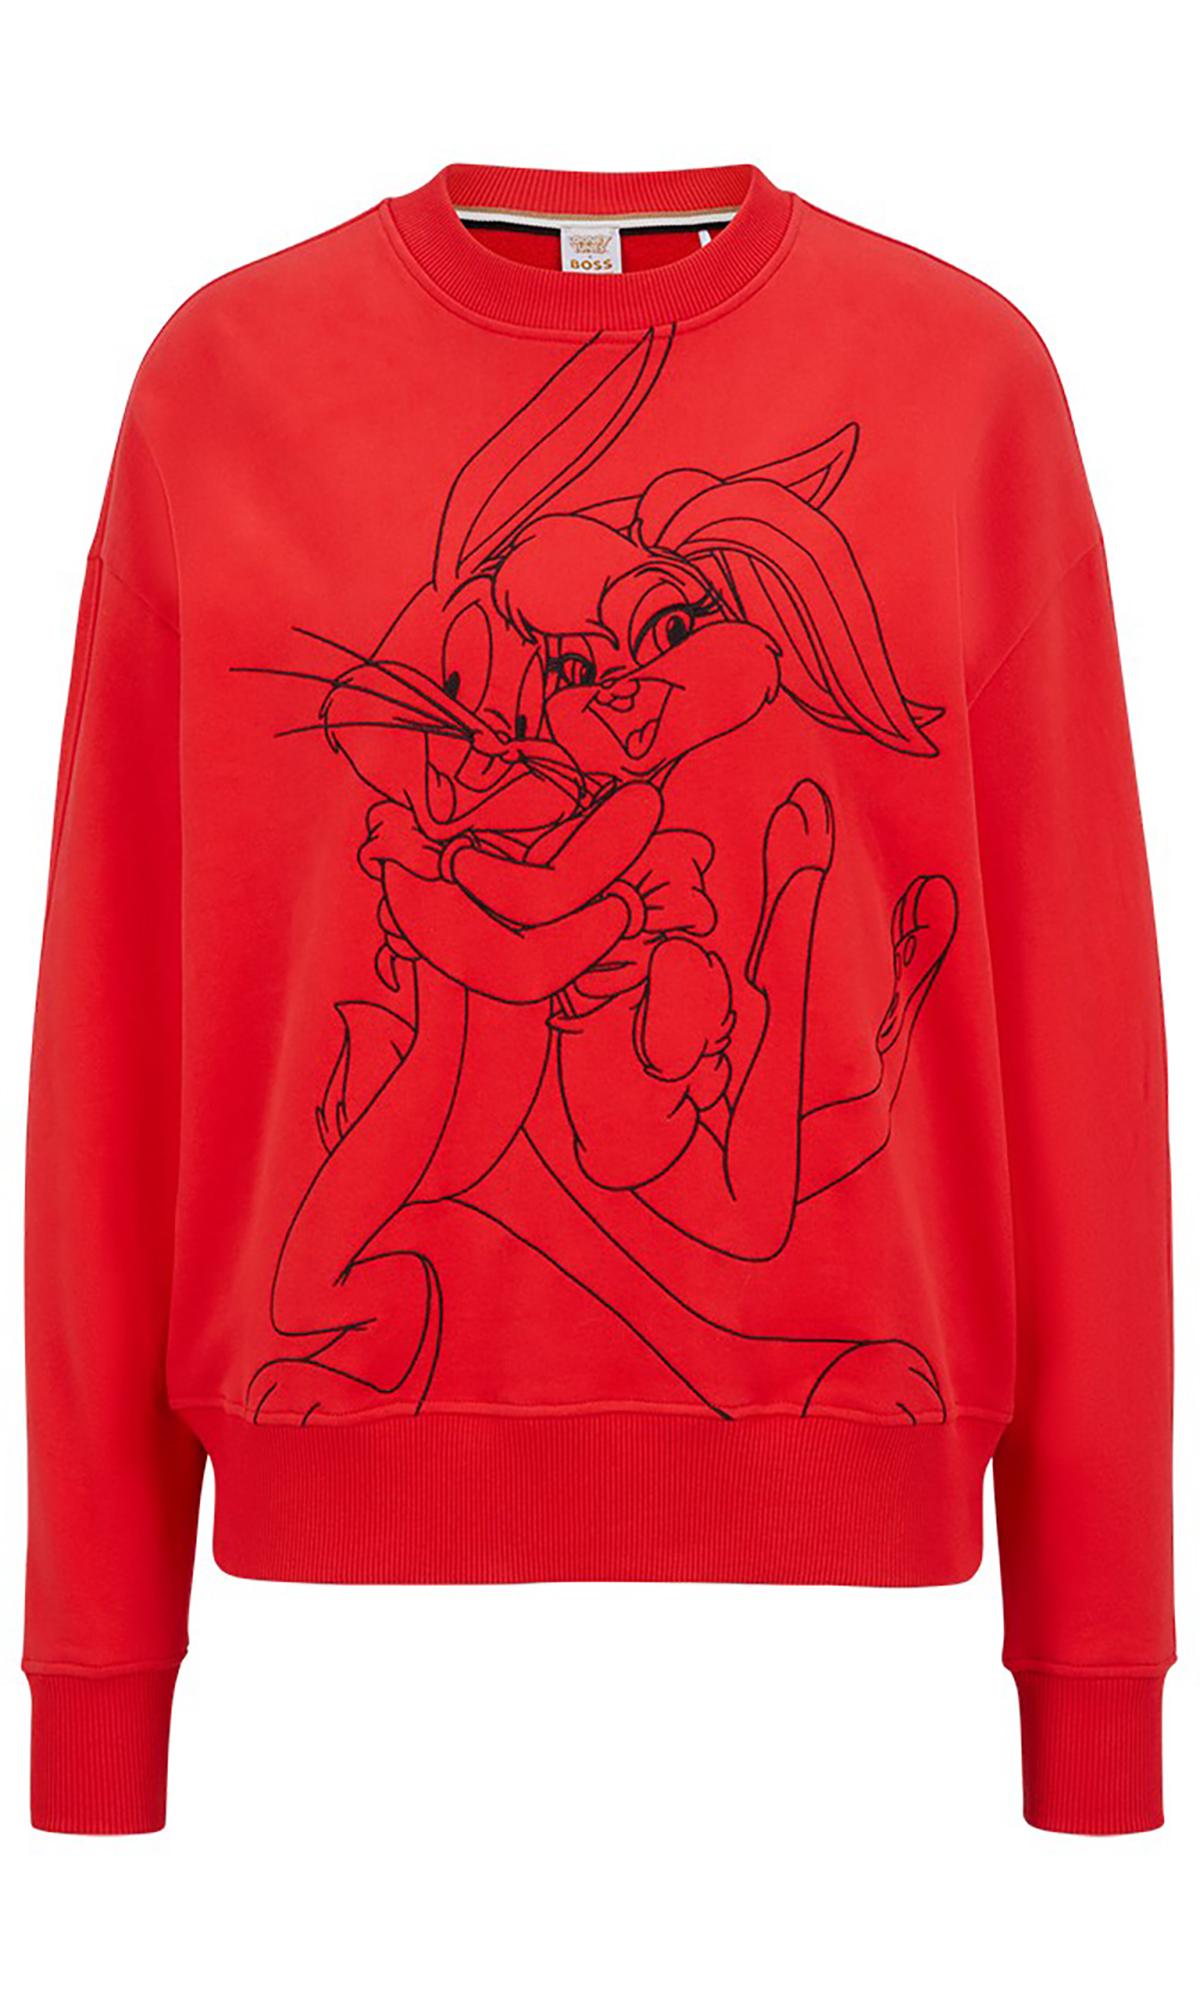 Пуловер Hugo Boss, цена по запросу, (fashionstore.ru)